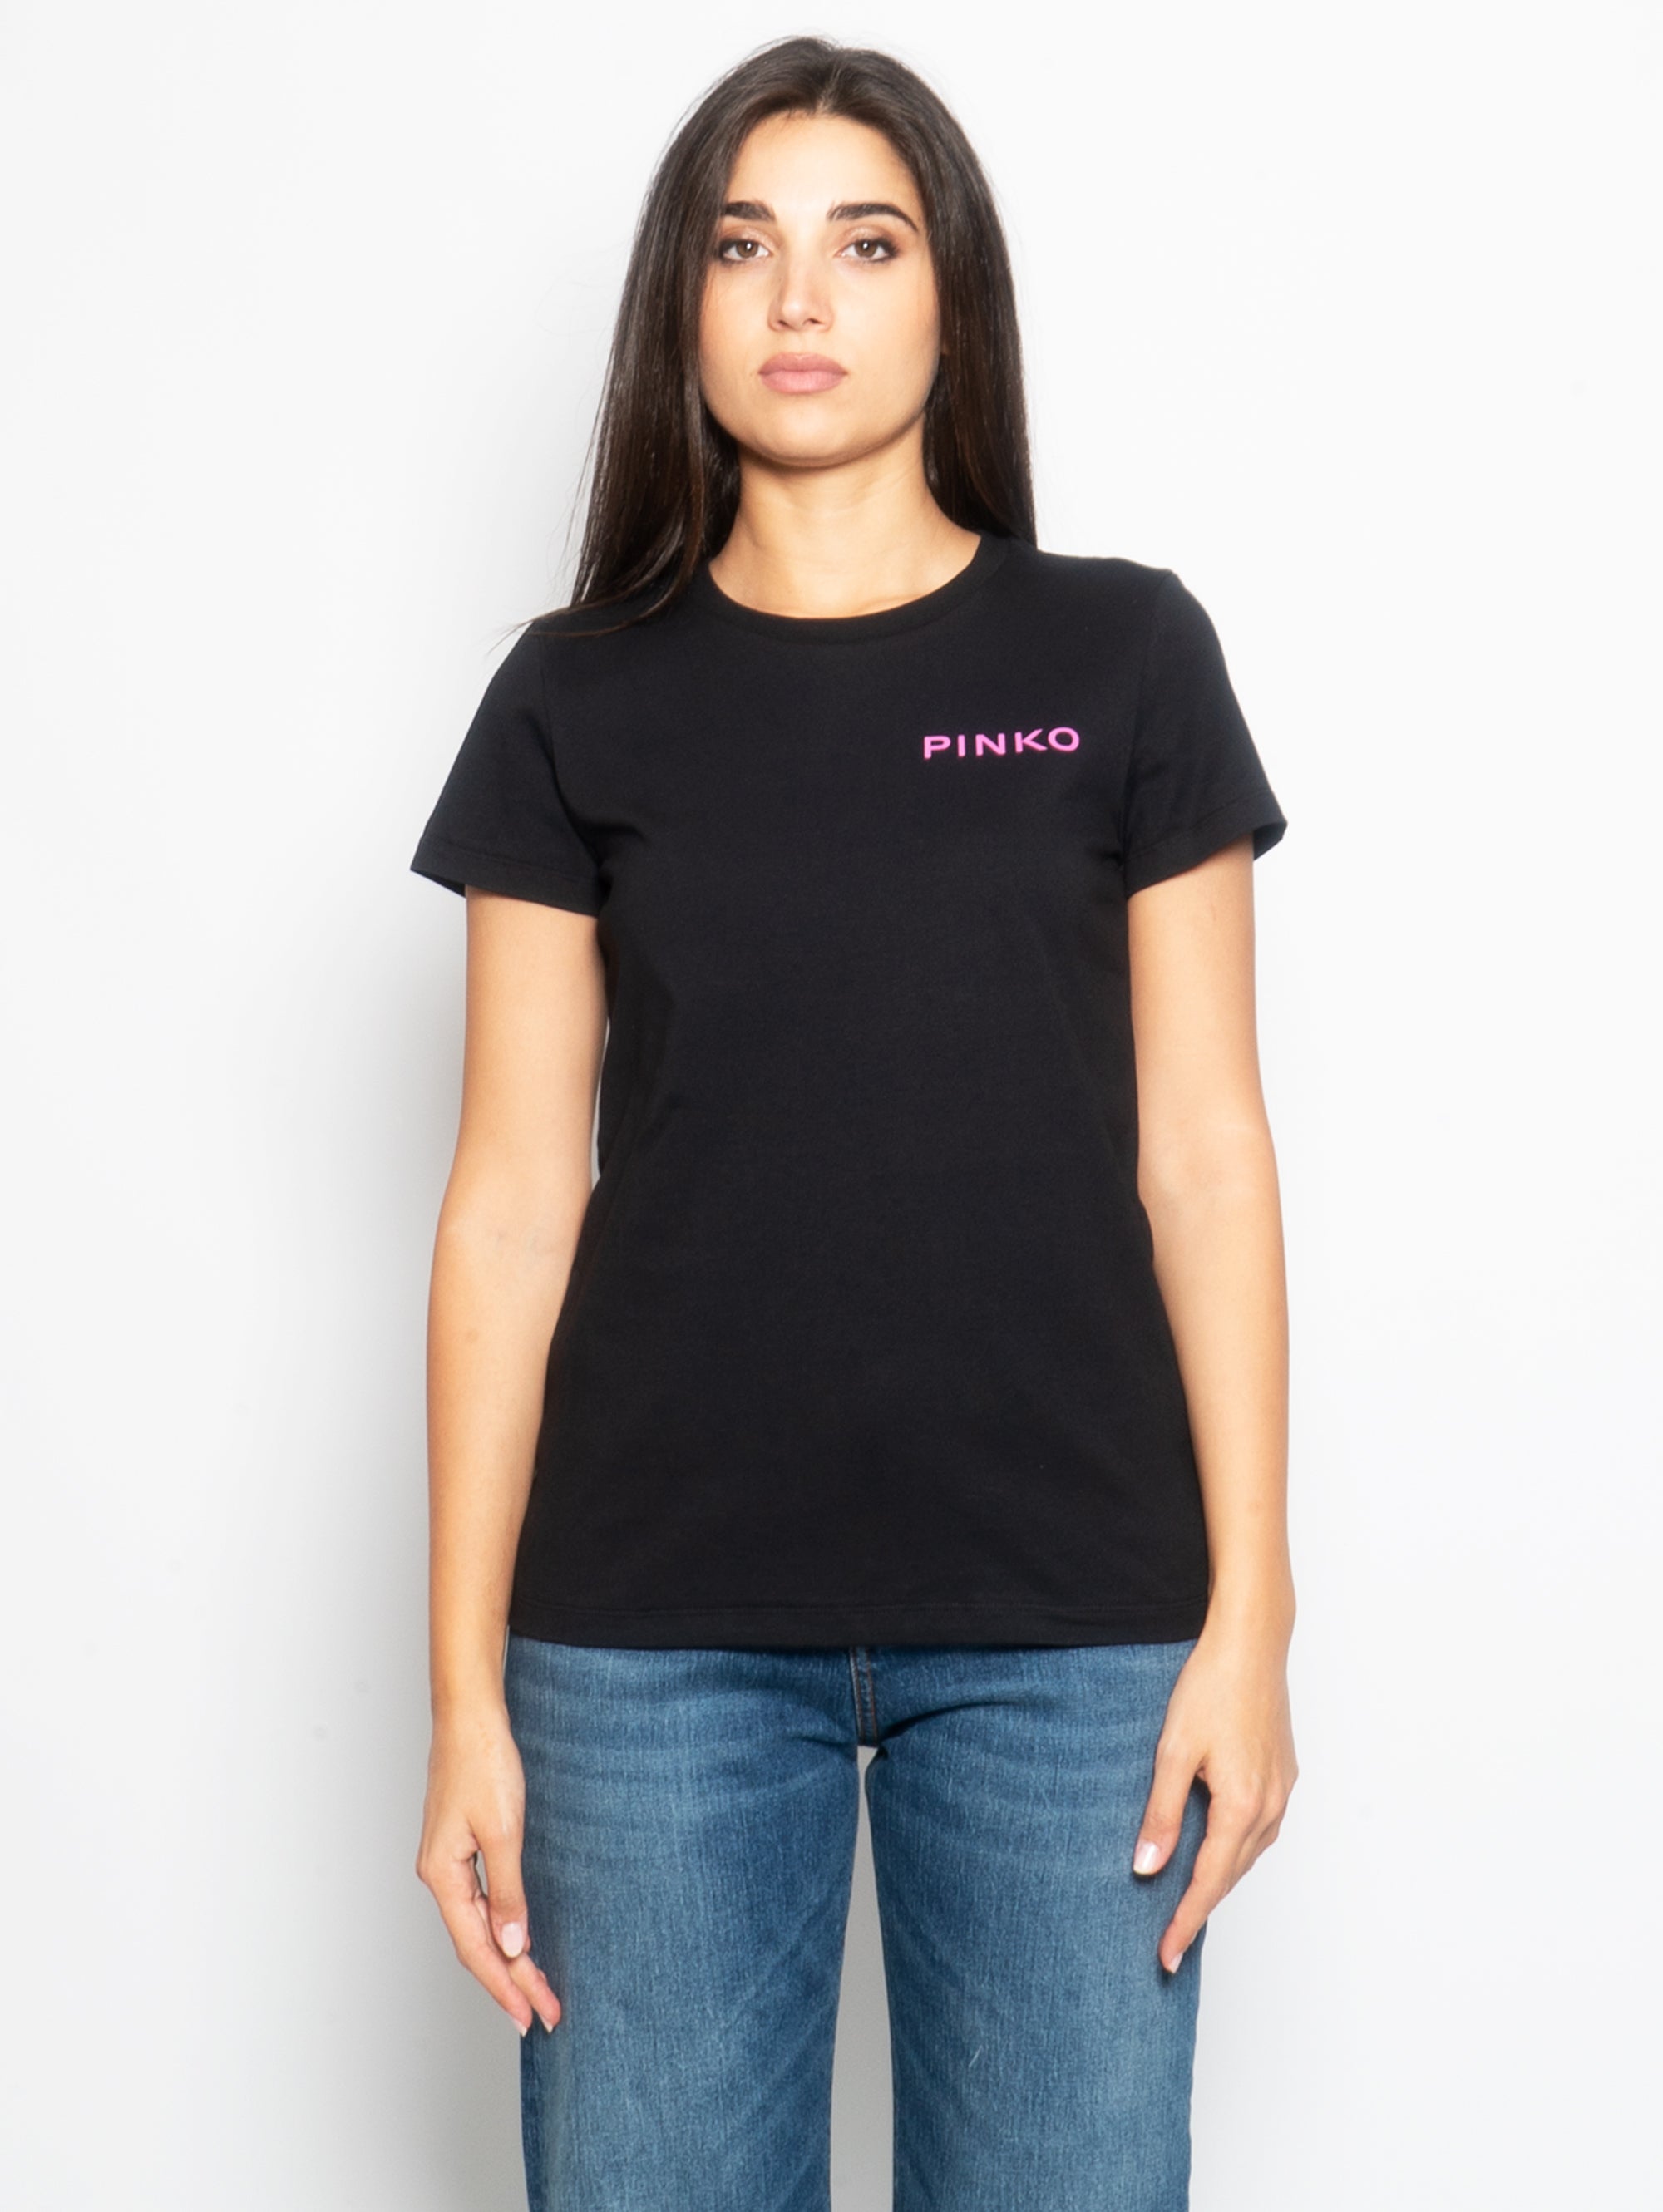 PINKO-T-shirt con Stampa Pinko Lady Nera-TRYME Shop